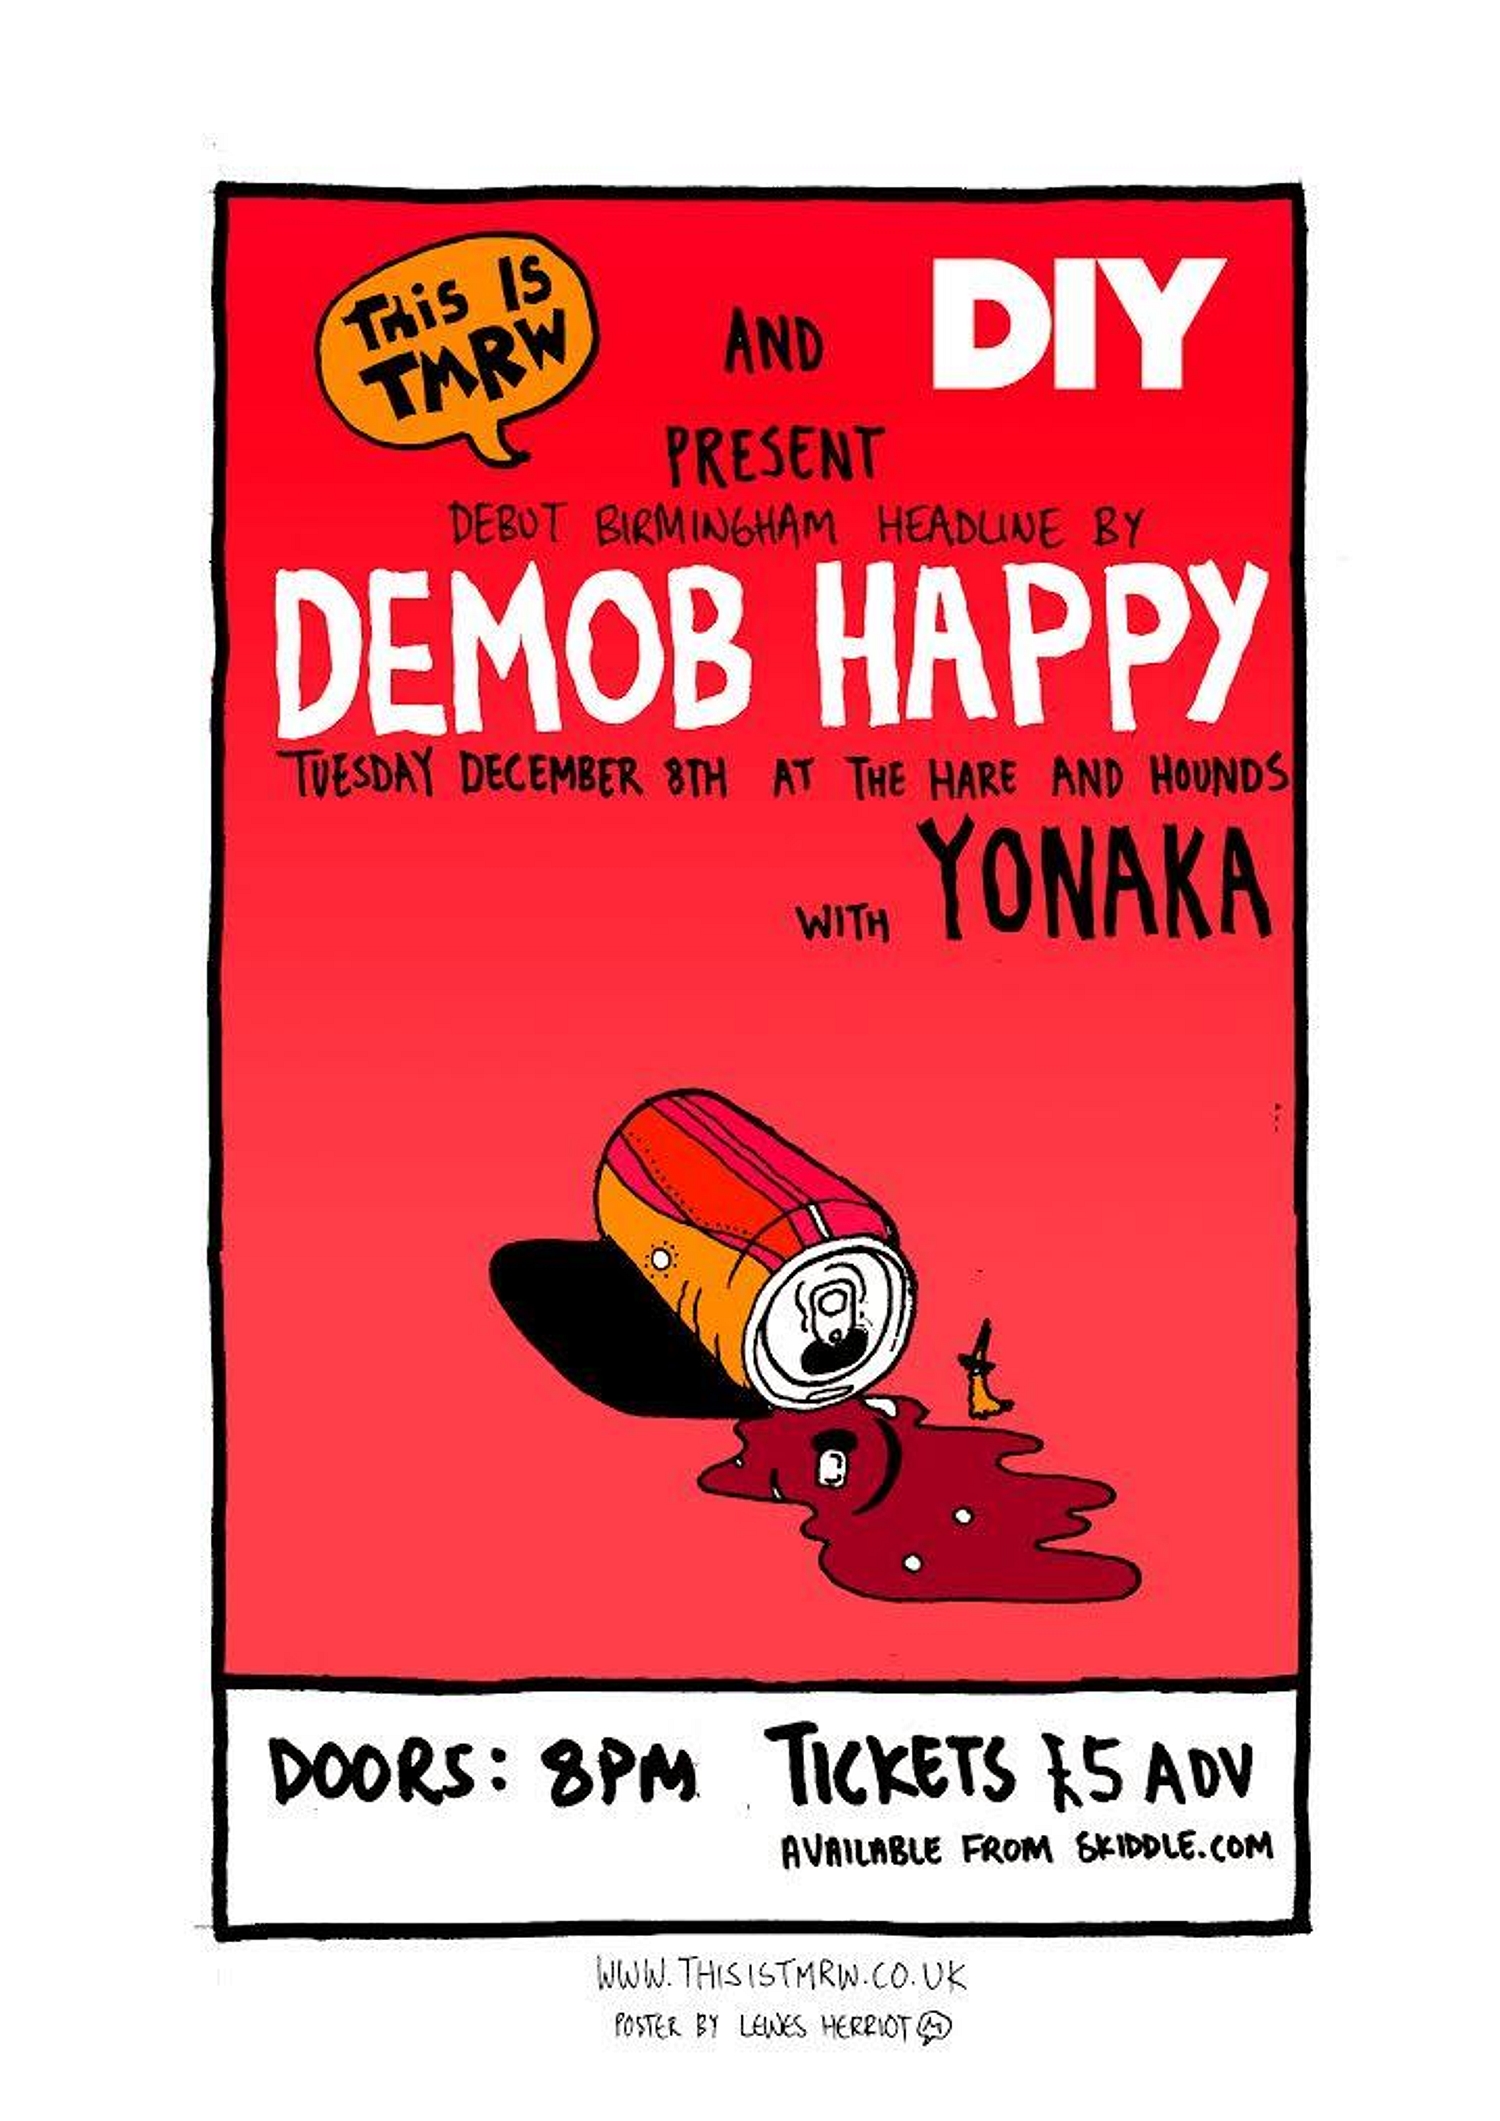 Demob Happy to headline DIY Presents Birmingham gig